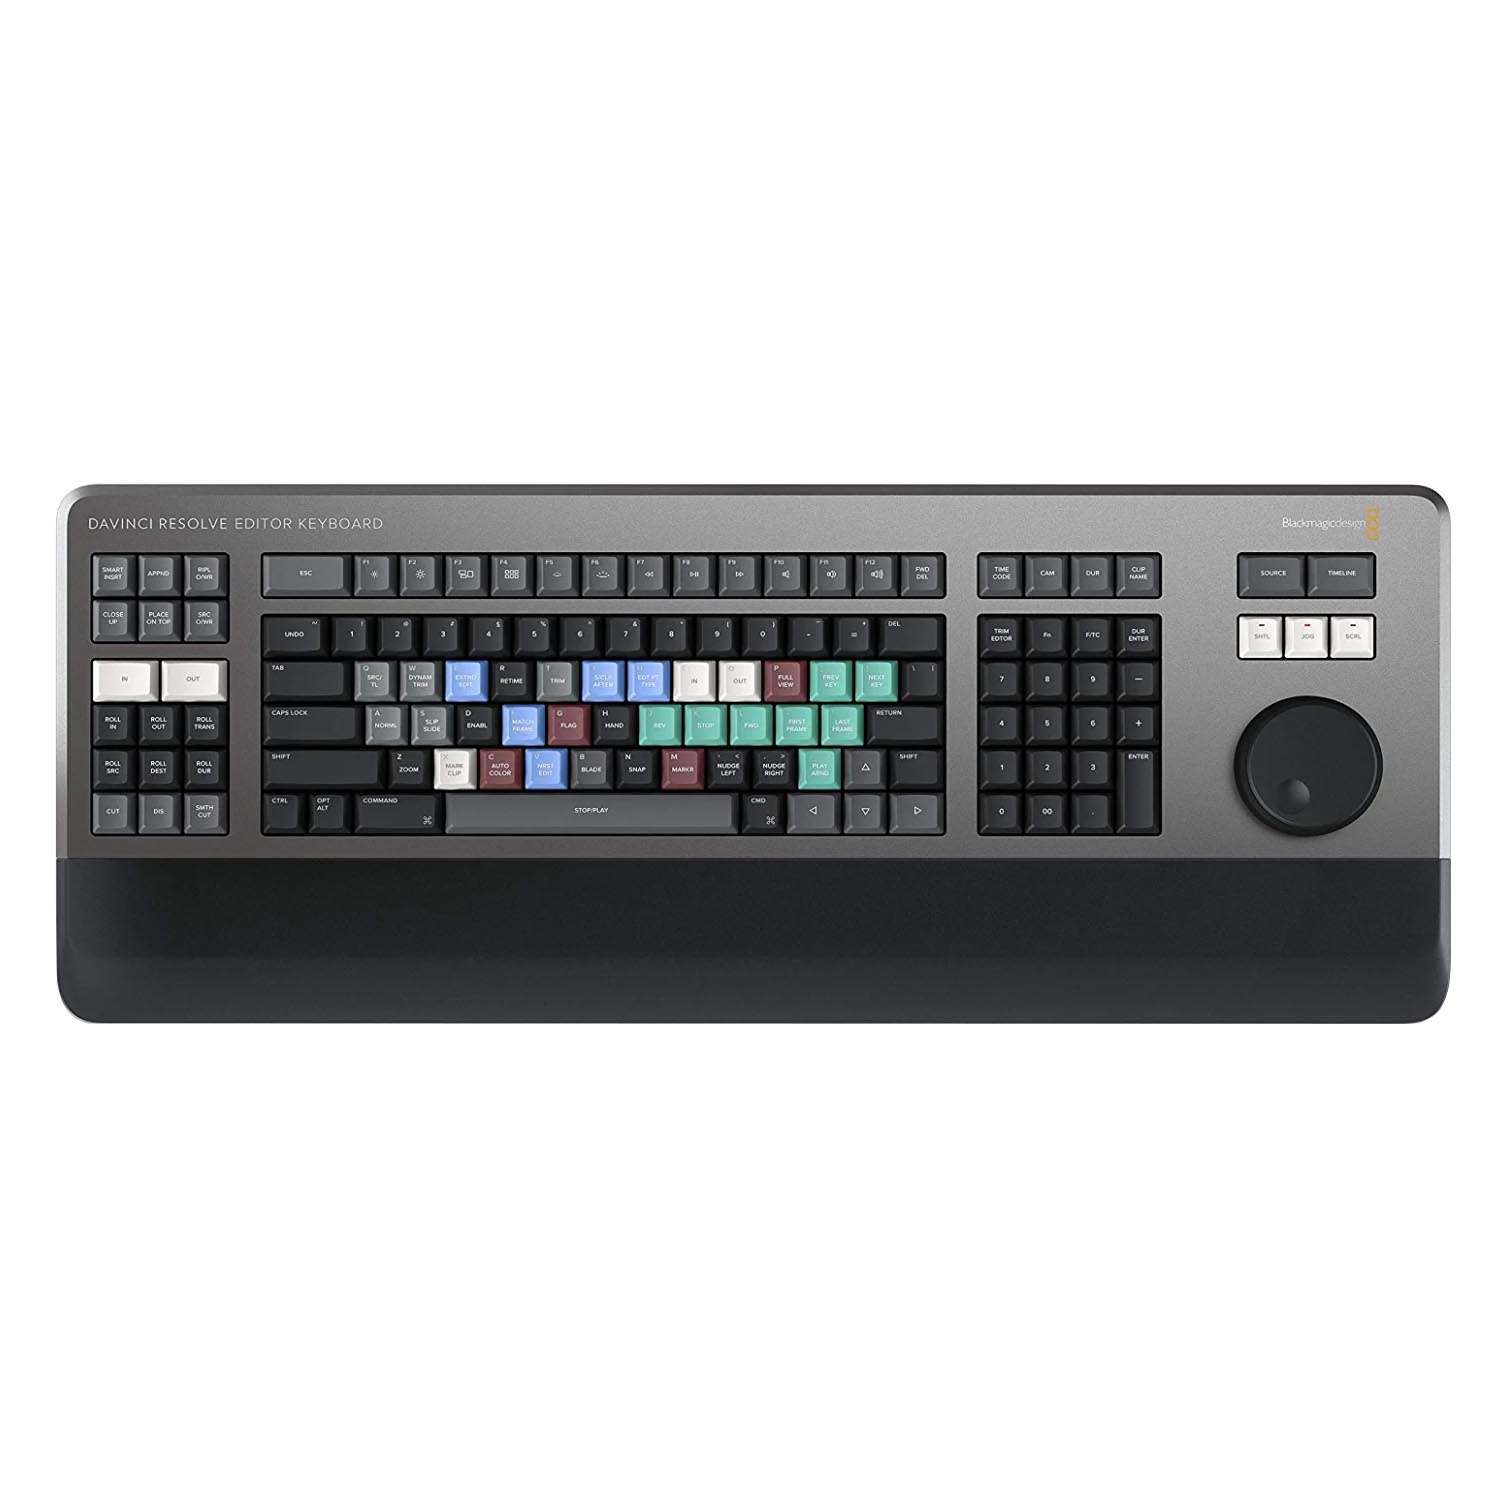 Монтажная клавиатура Blackmagic Design DaVinci Resolve Editor Keyboard, серый